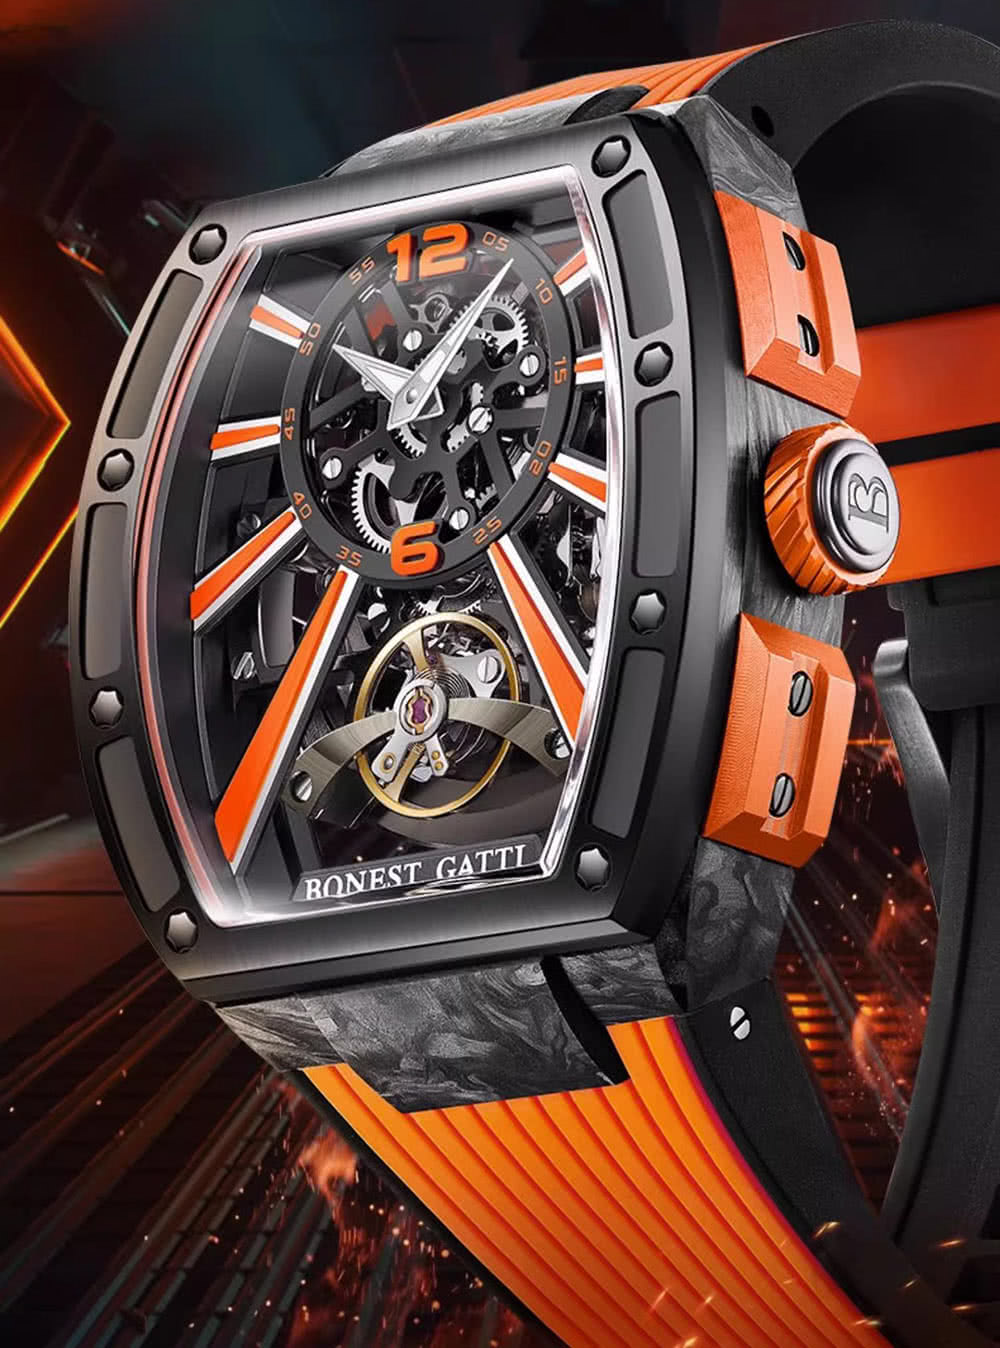 BONEST GATTI 寶加地-芯橋魅影碳纖機械錶(橙光橘